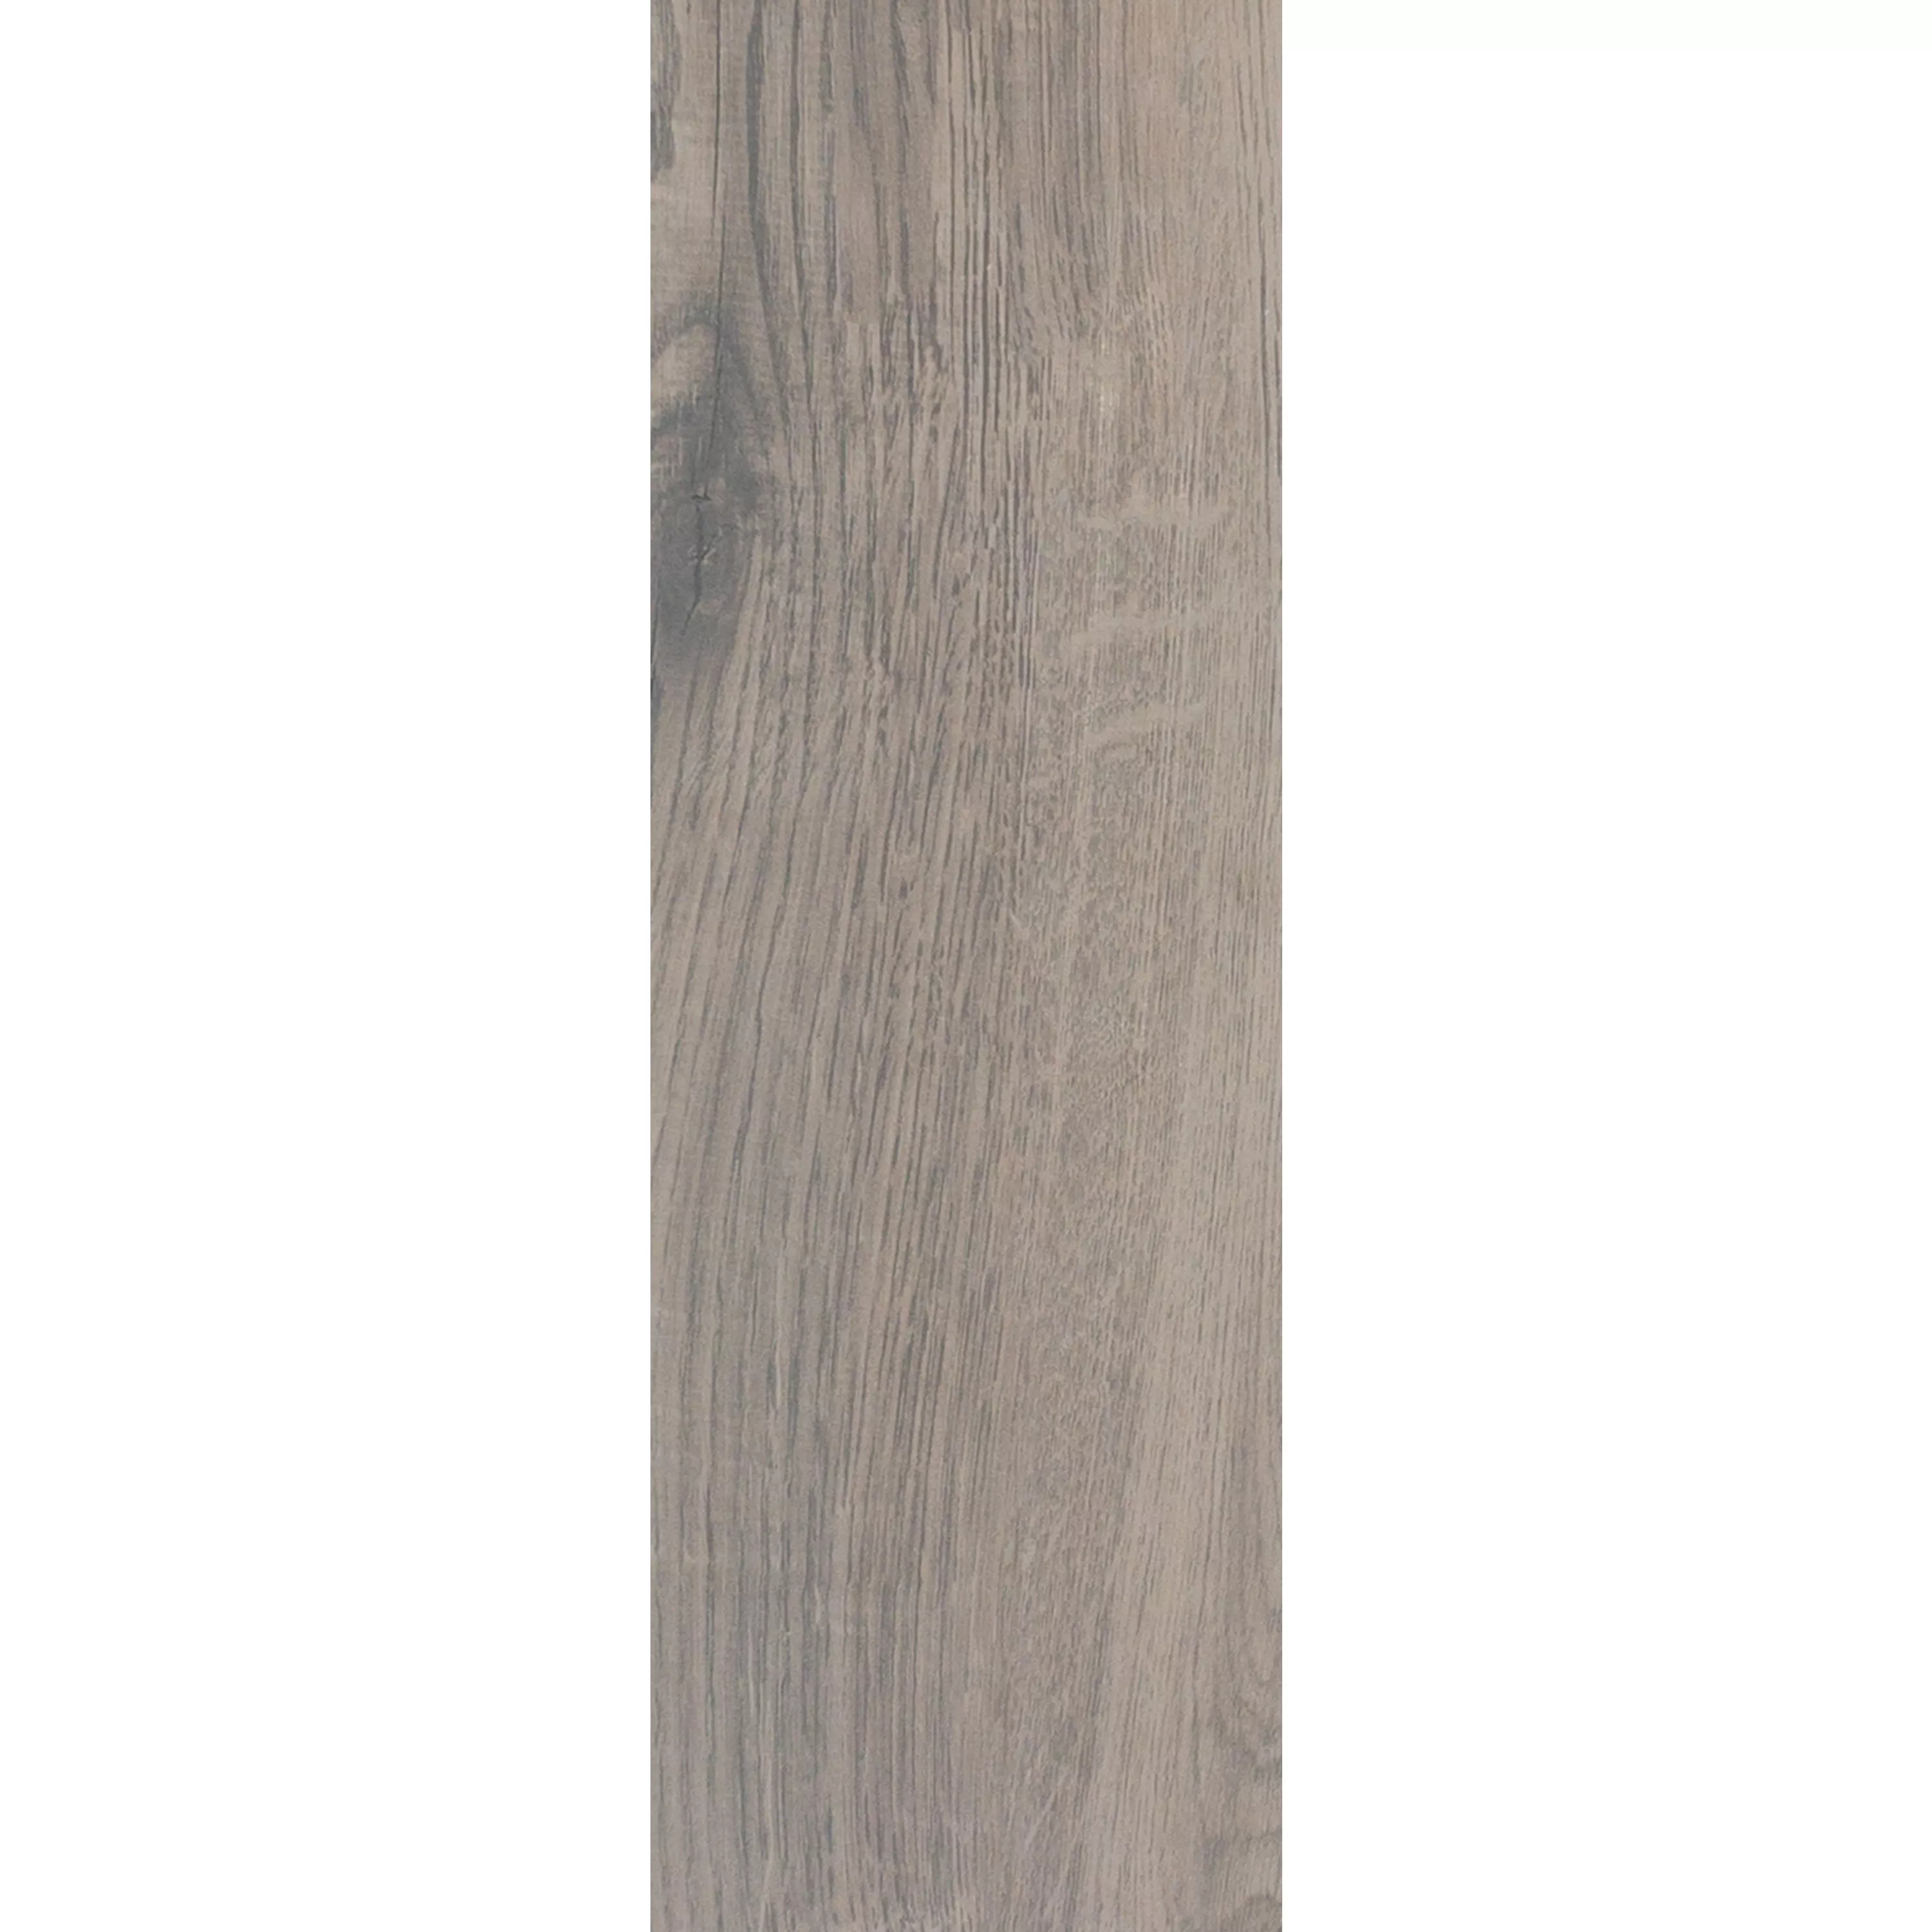 Gulvfliser Imiteret Træ Fullwood Brun 20x120cm